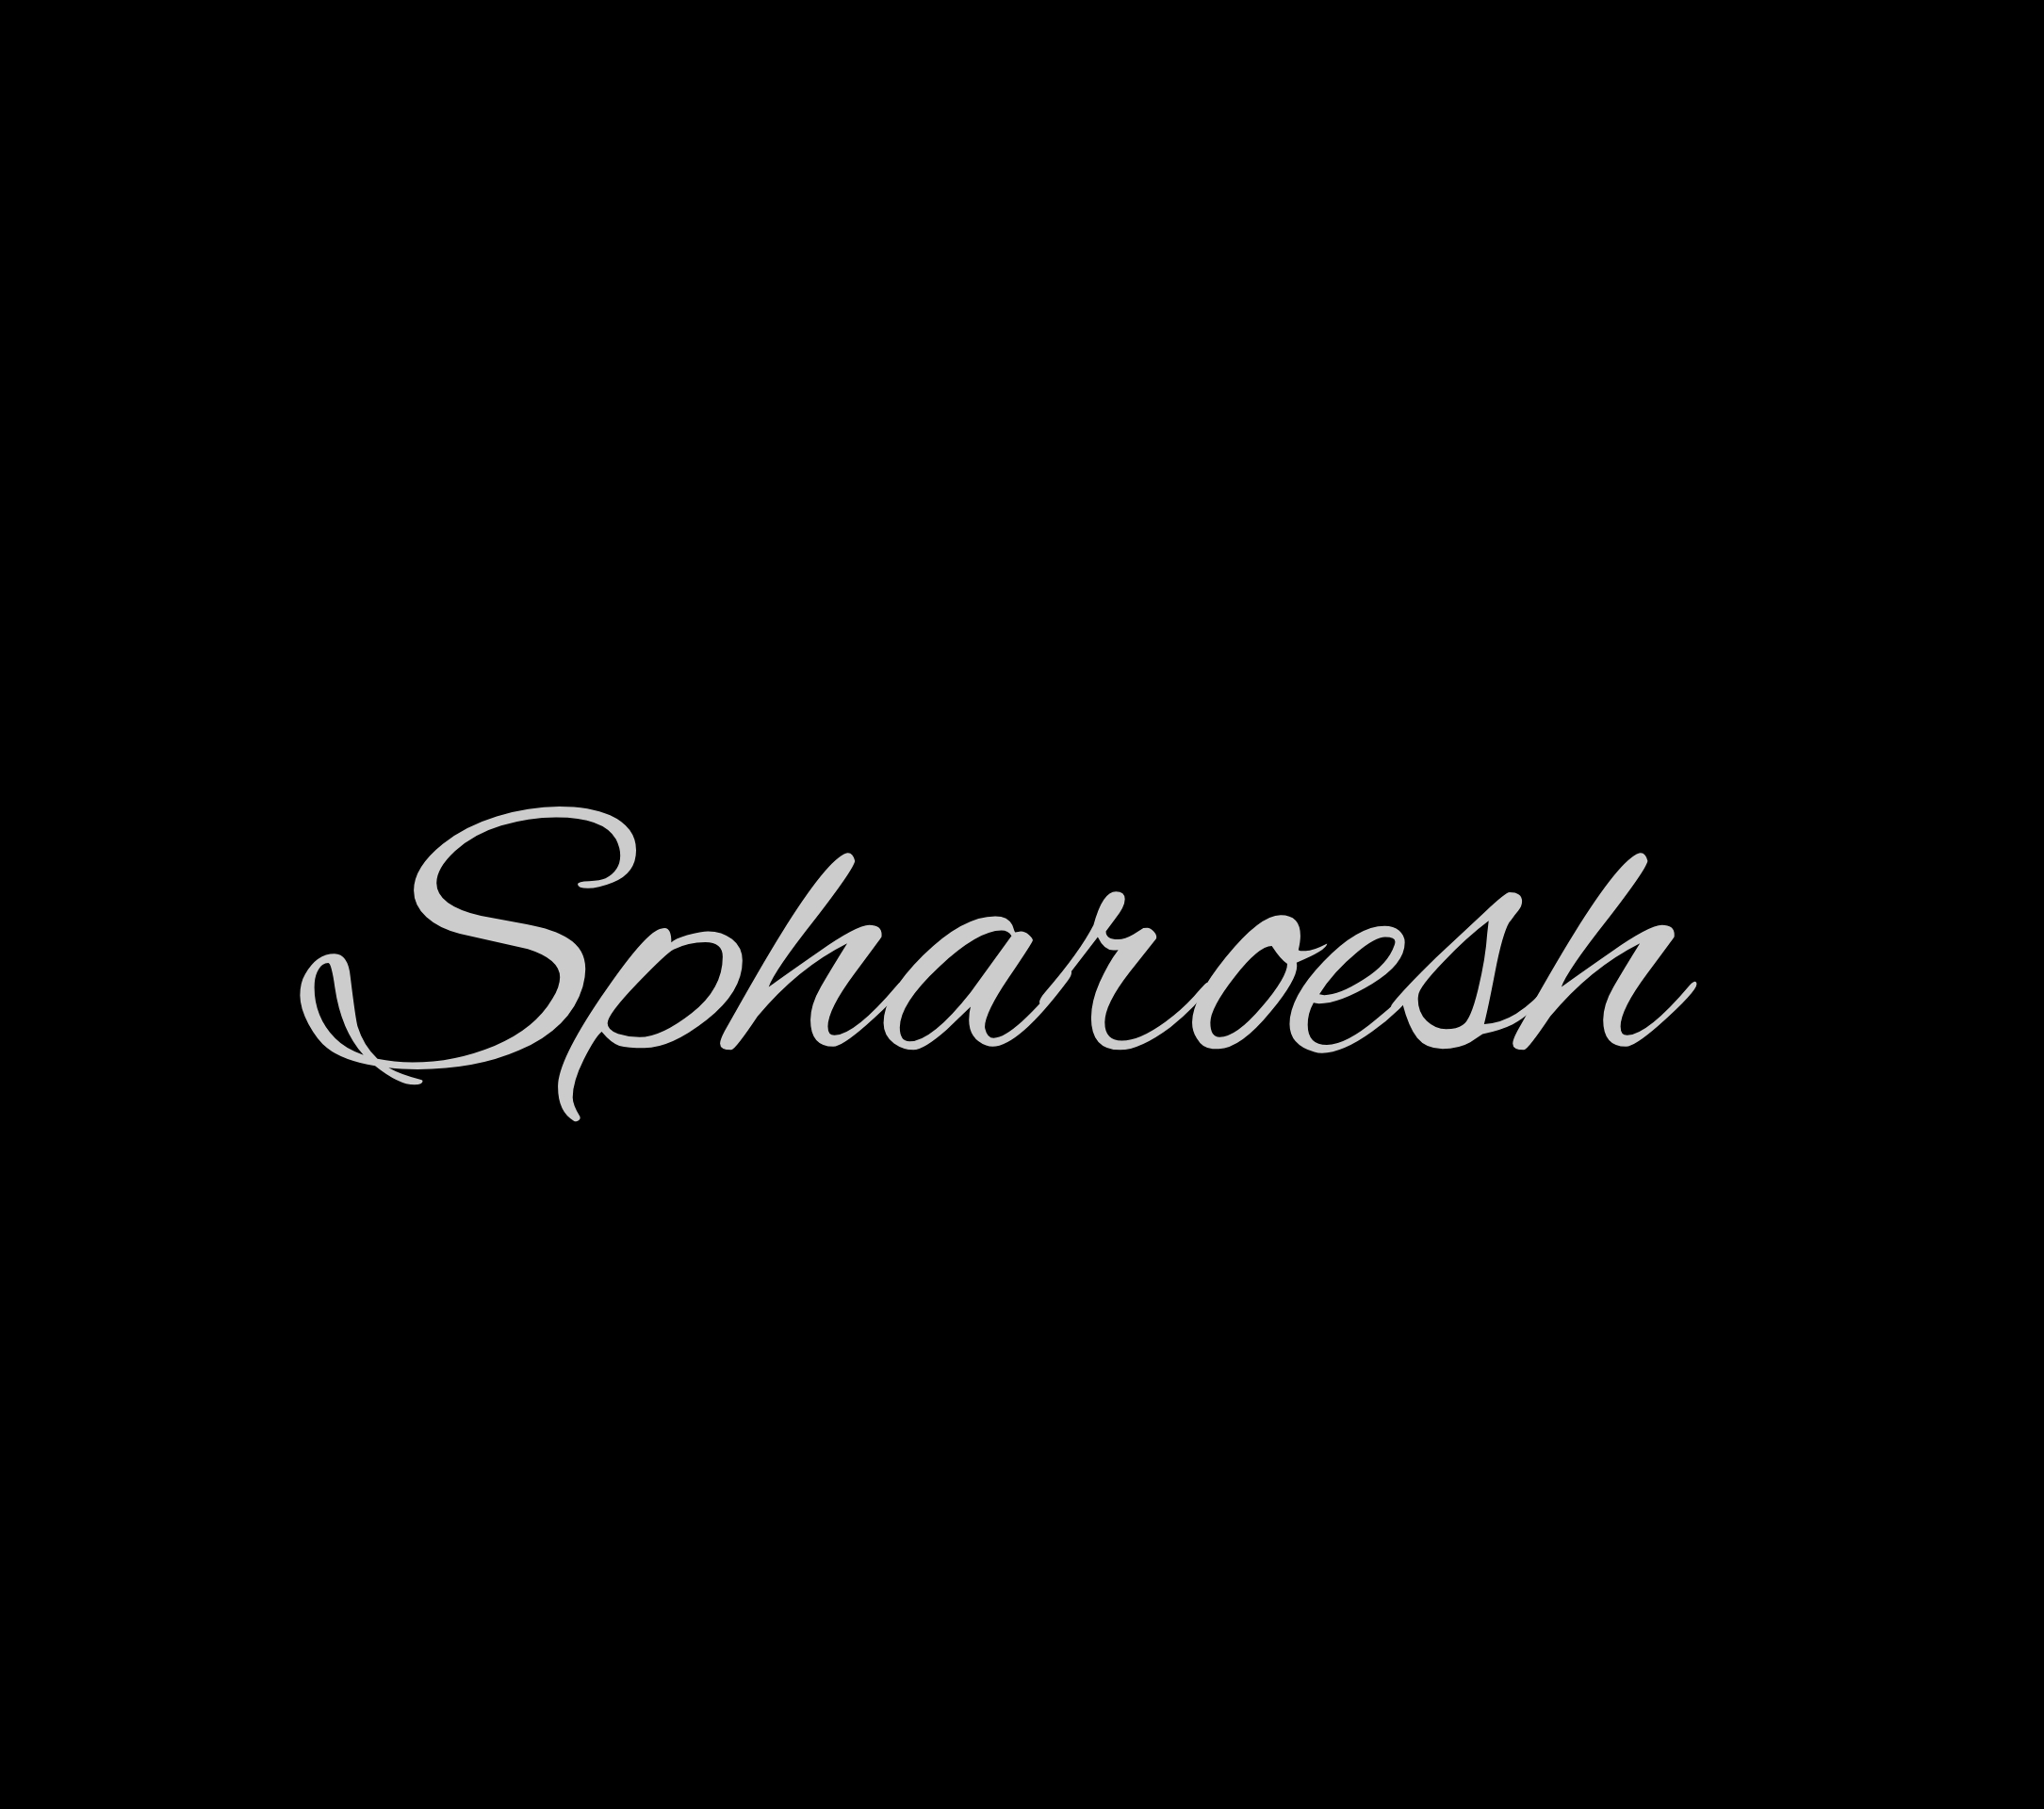 Spharoesh